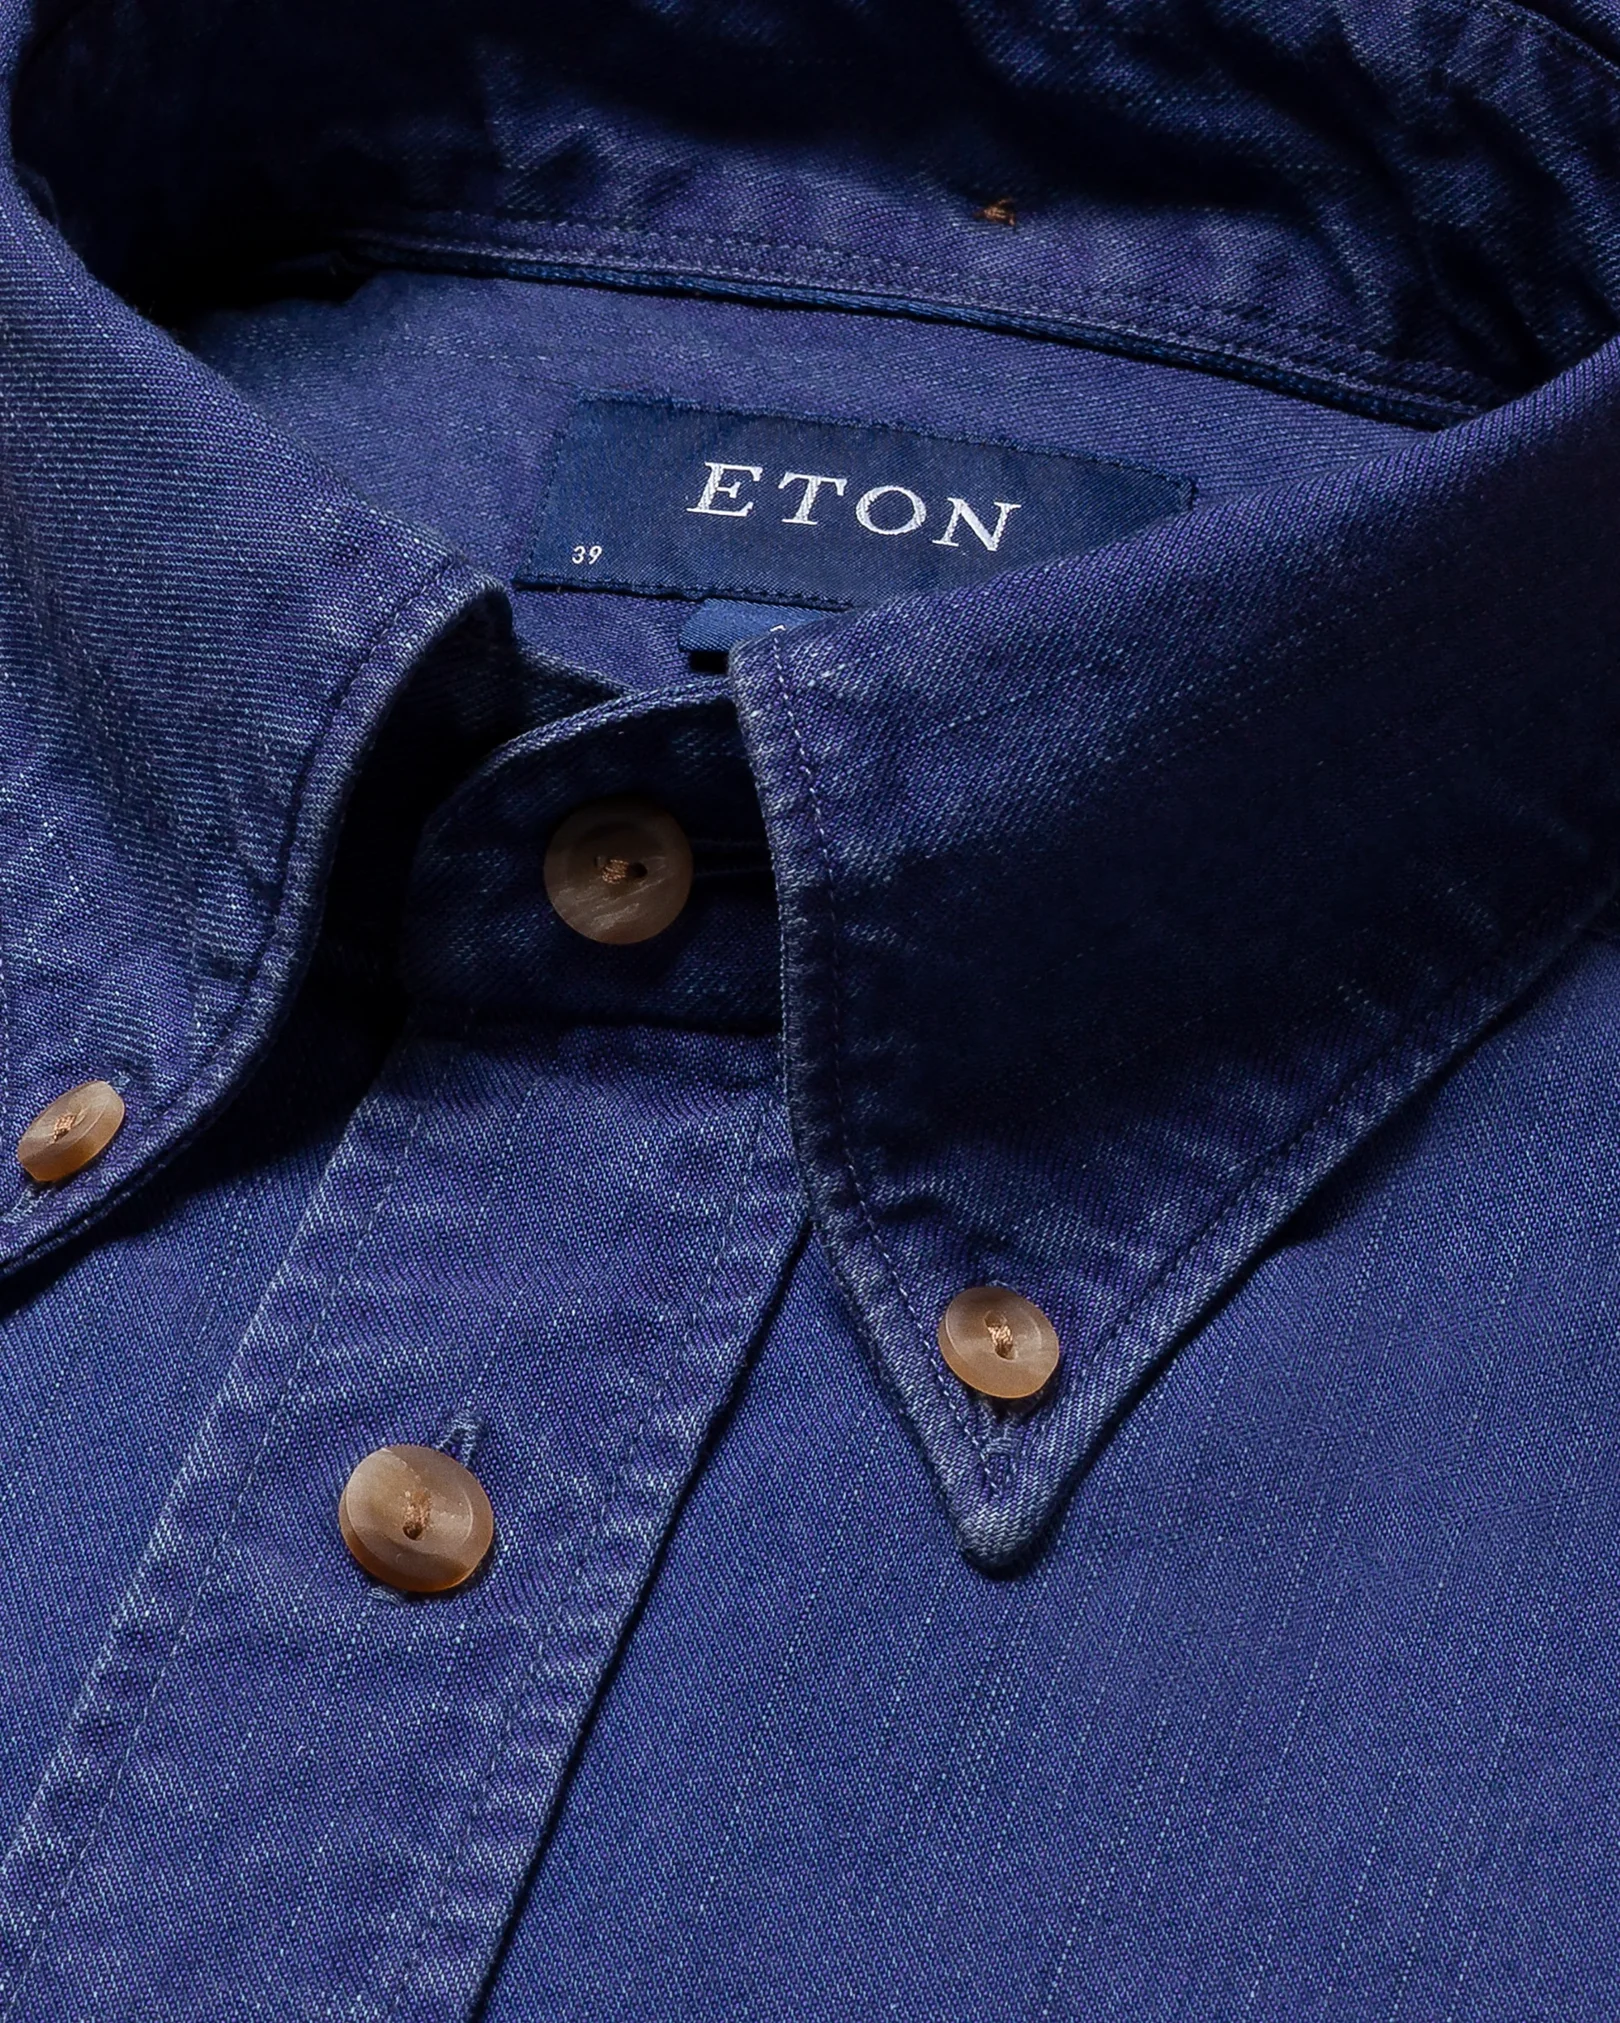 Eton - mid blue denim shirt with horn buttons button down